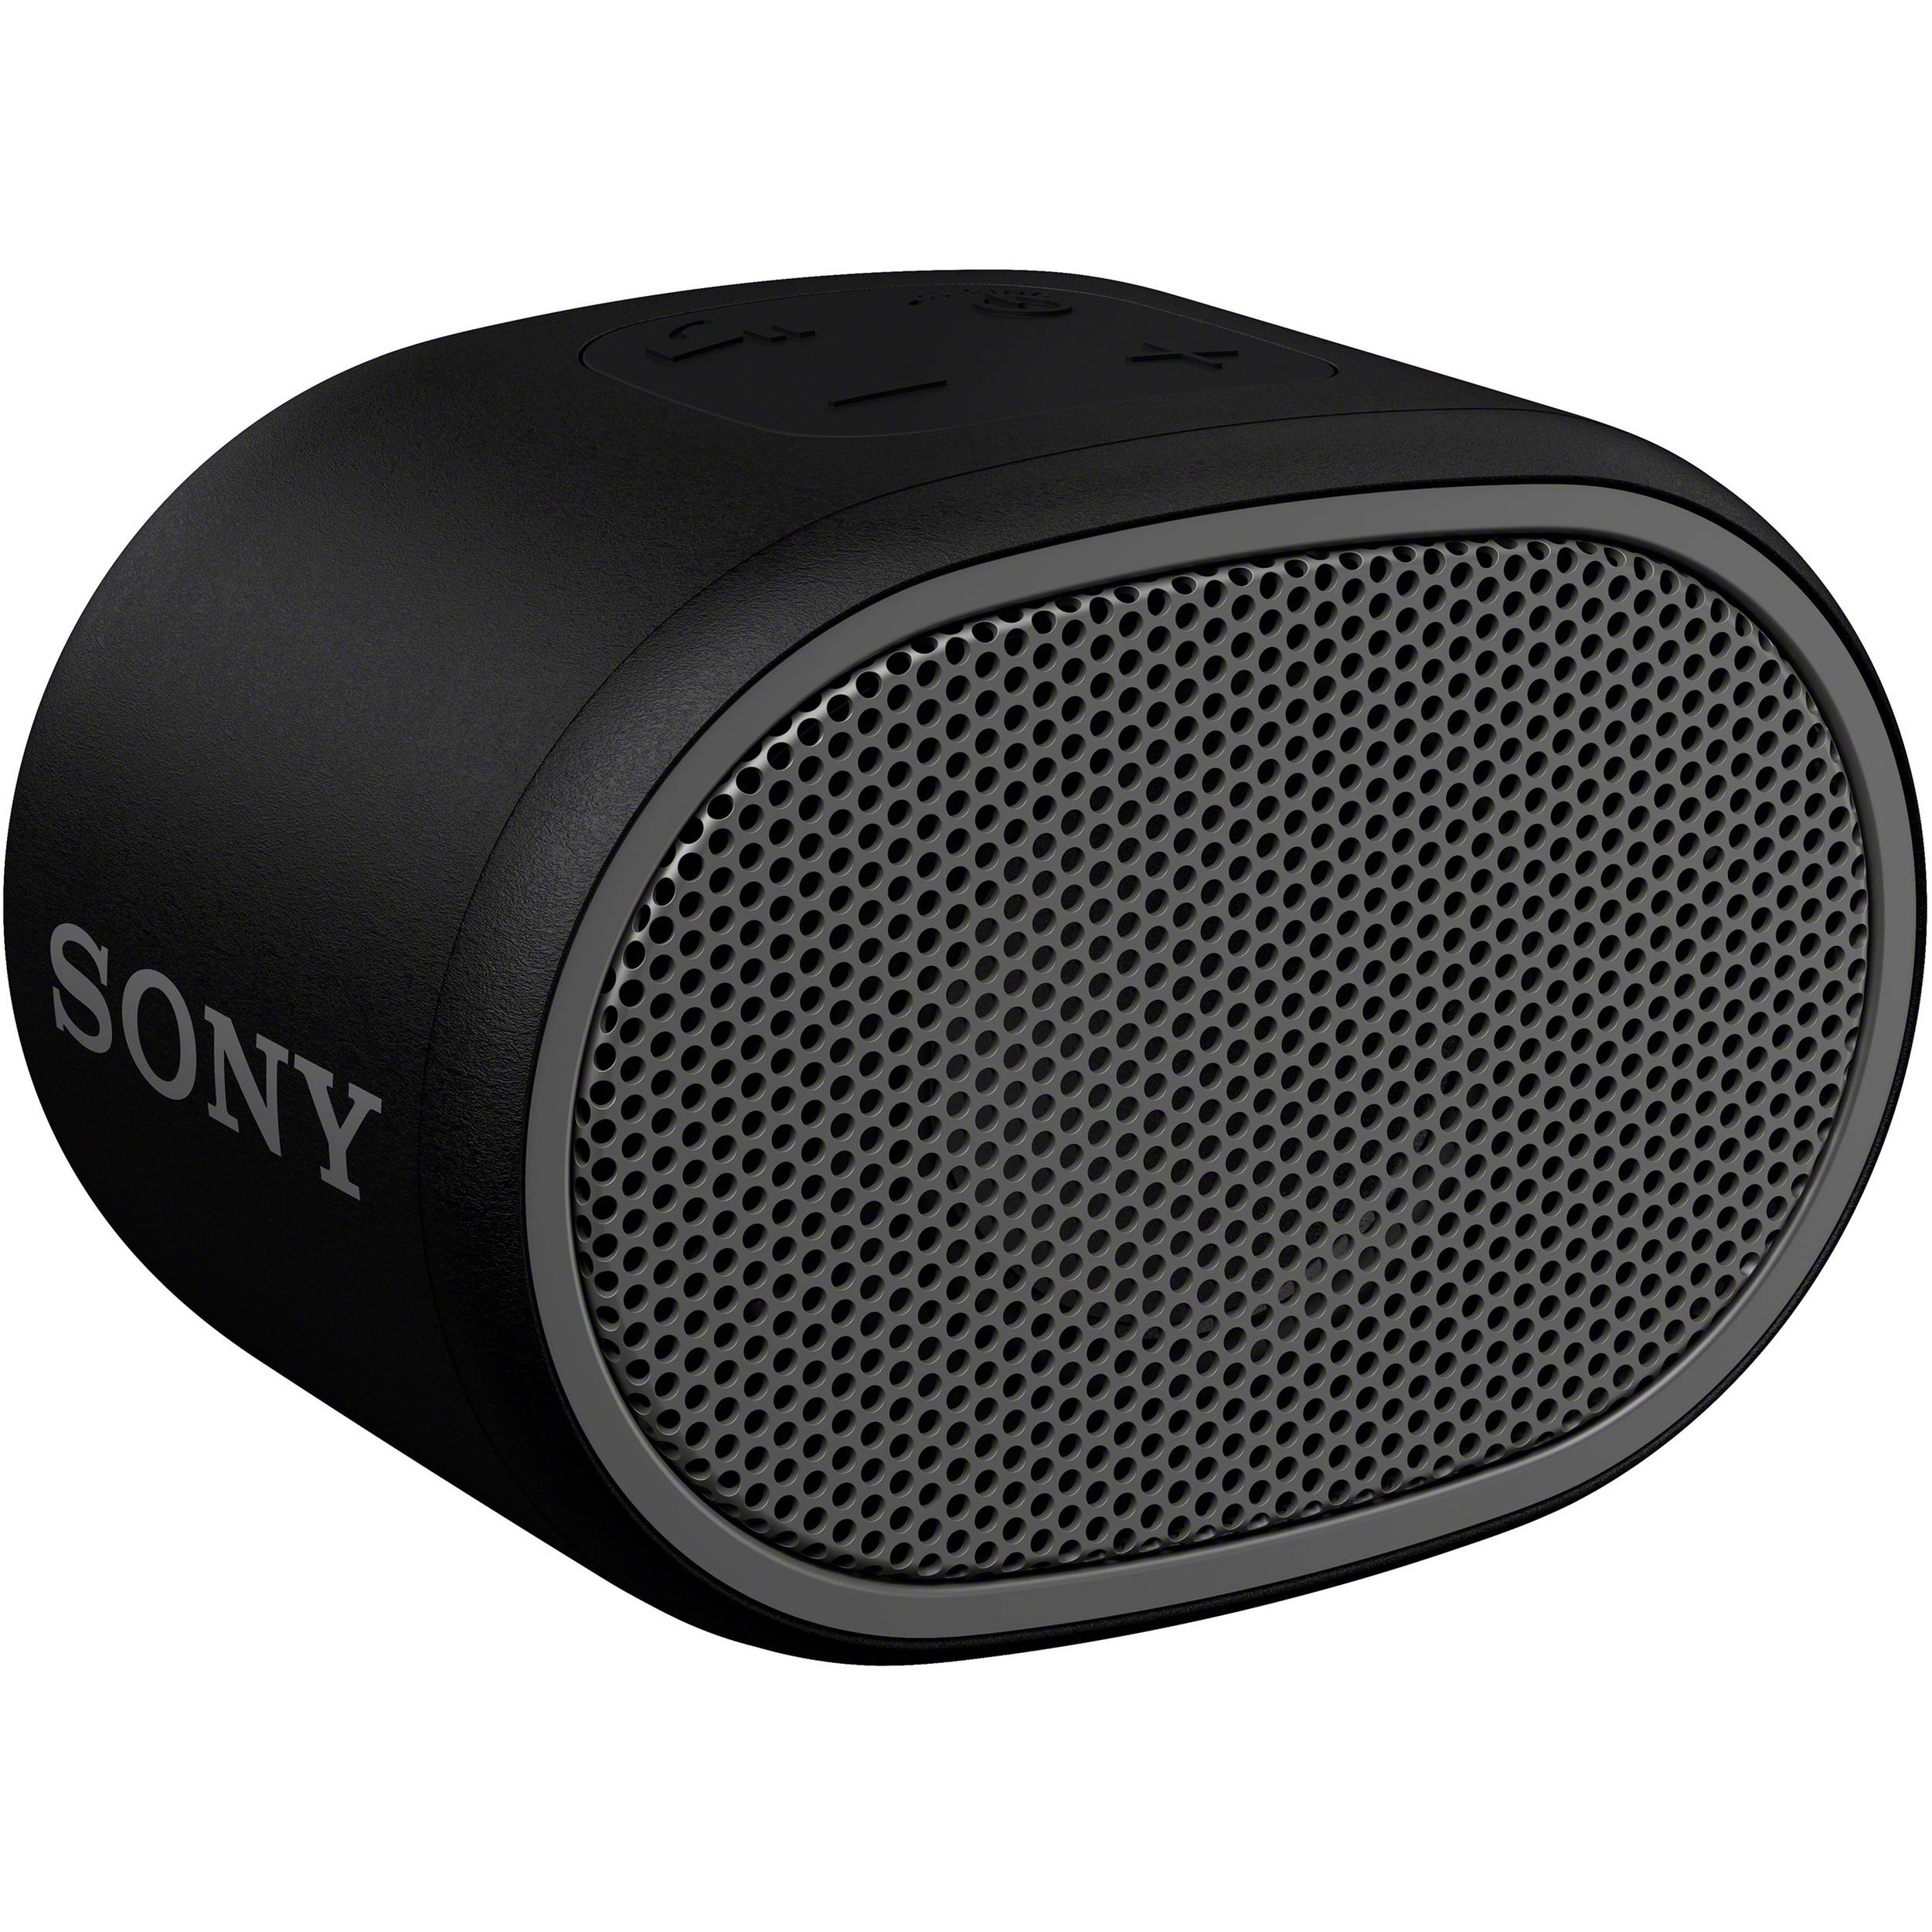 Sony Bluetooh Speaker